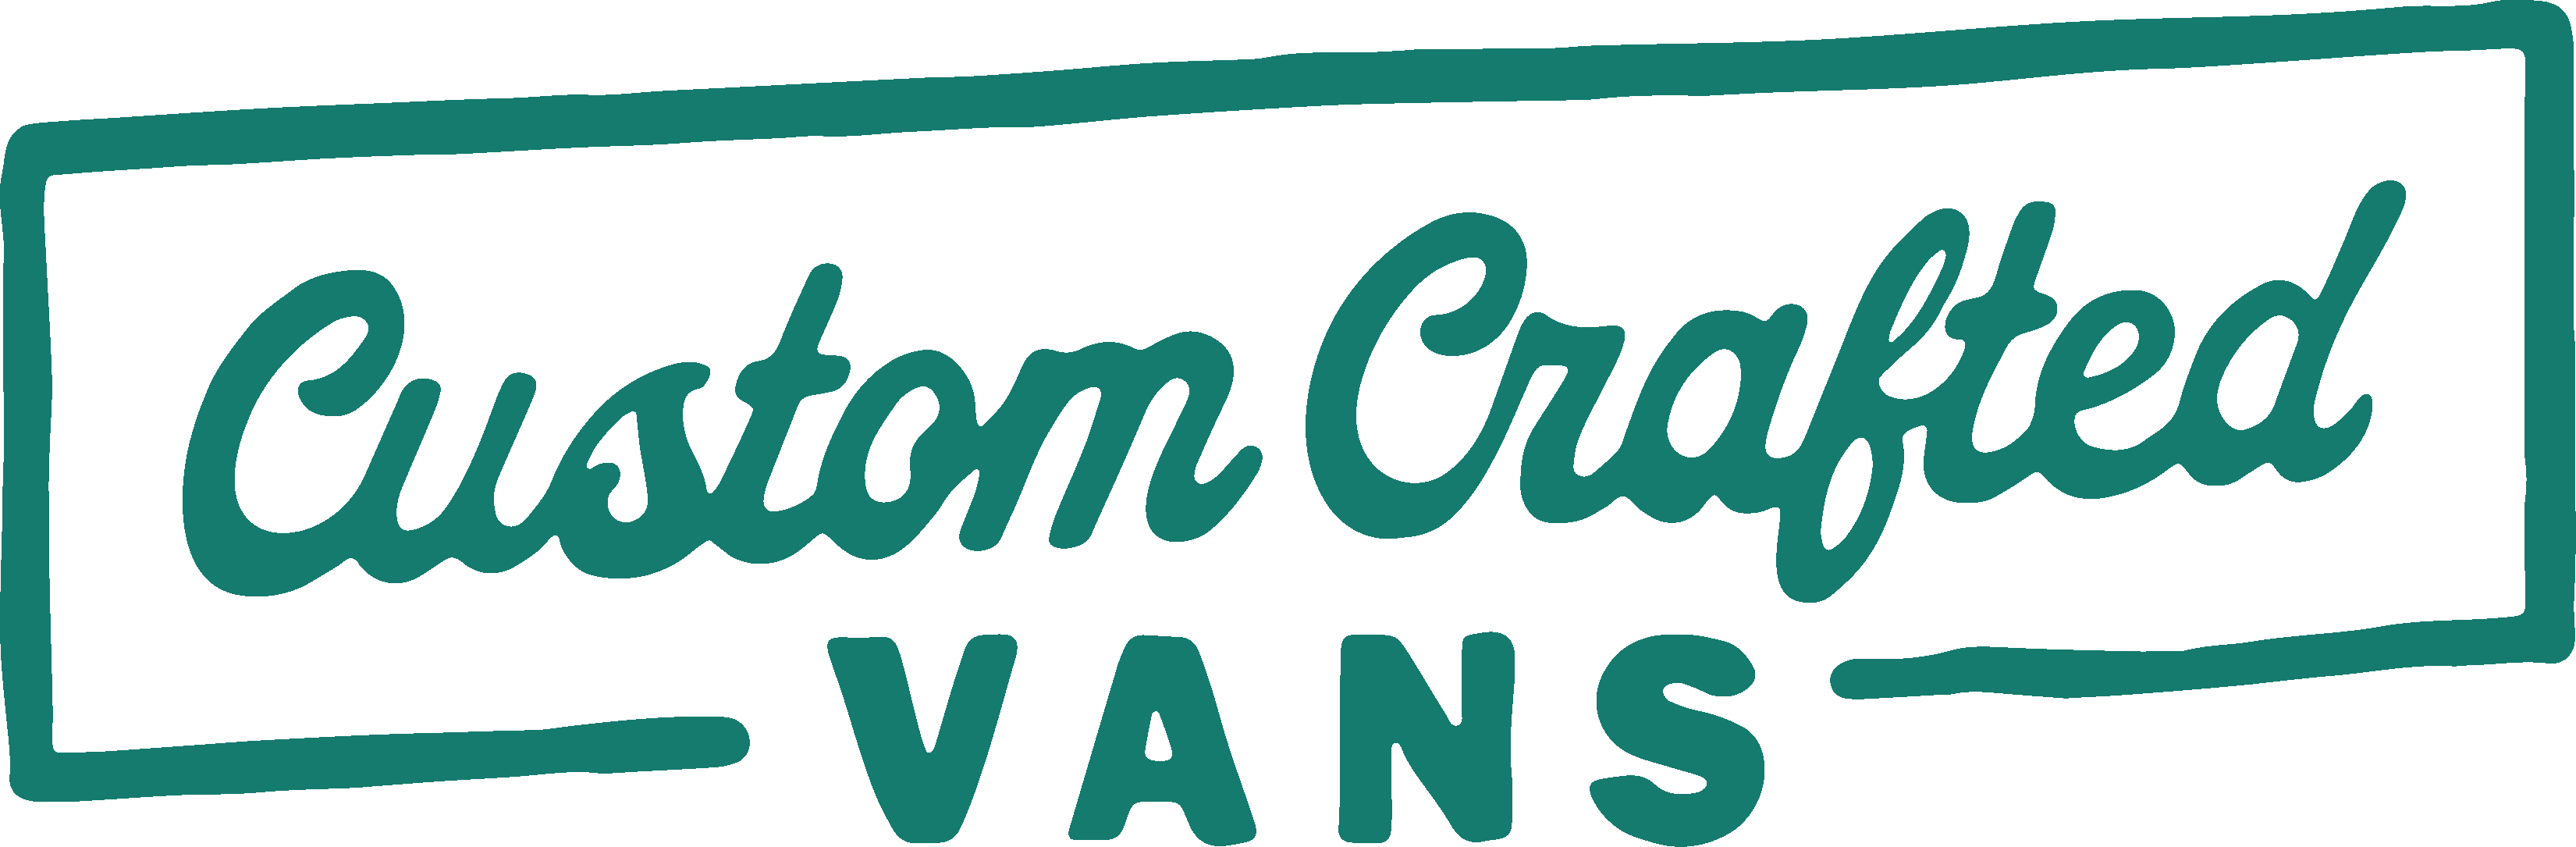 ccv-logo-main-green